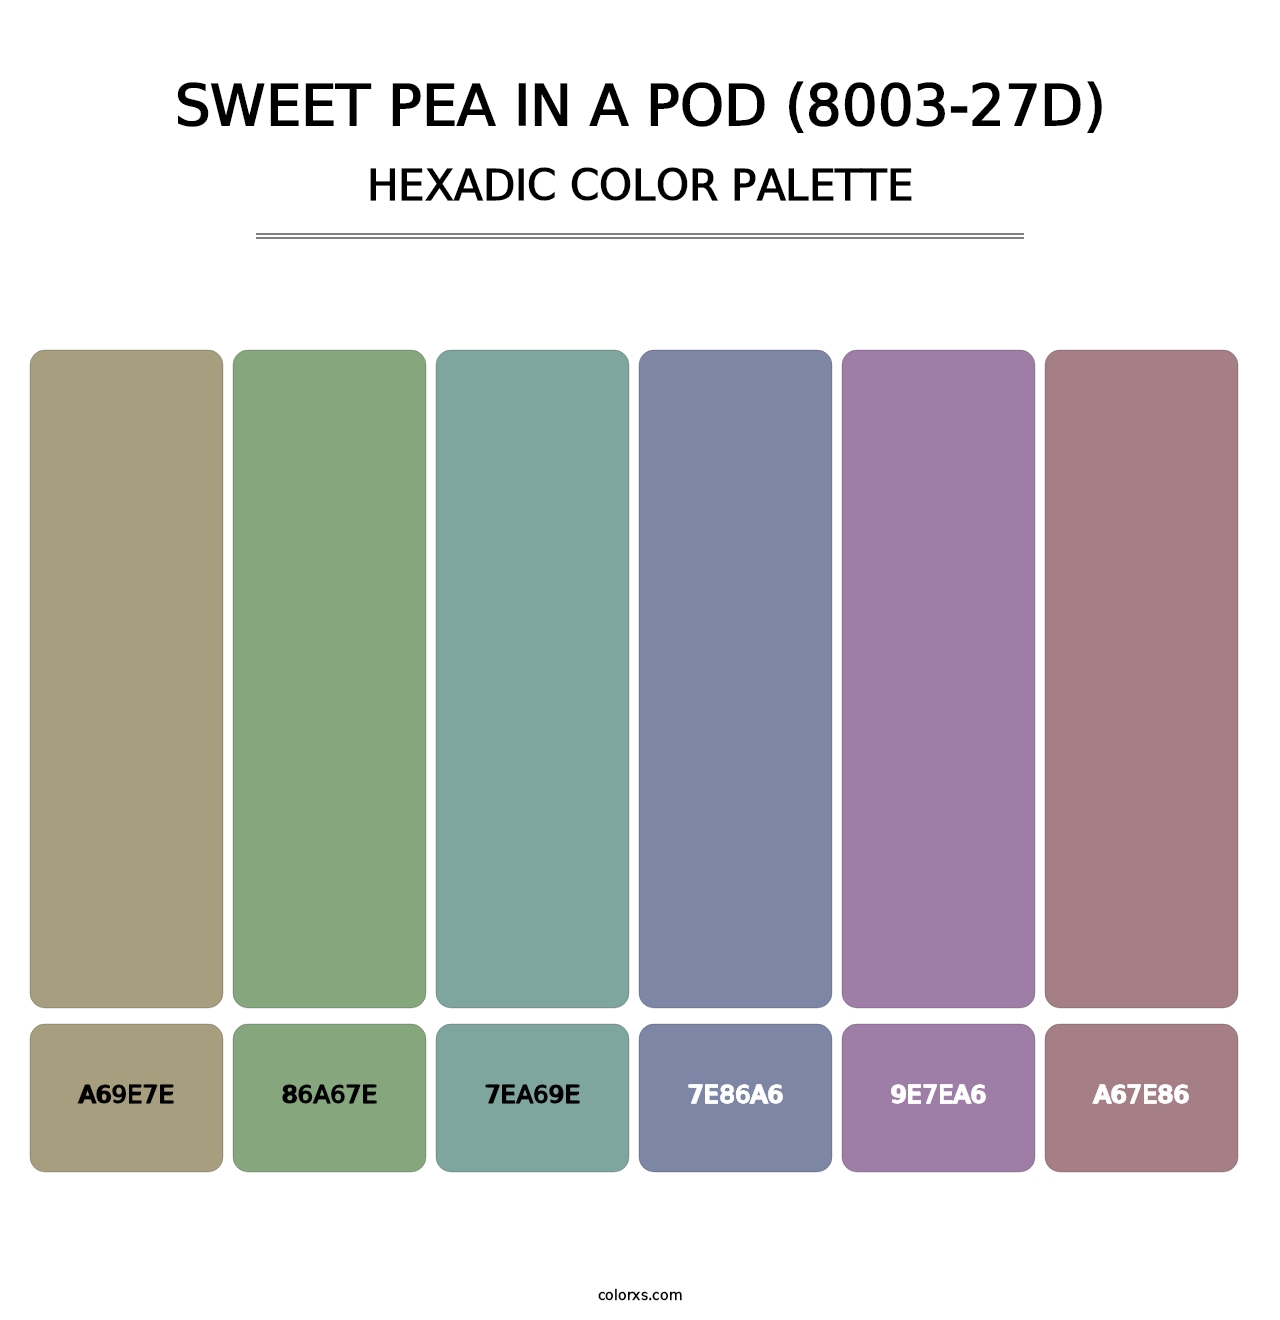 Sweet Pea in a Pod (8003-27D) - Hexadic Color Palette